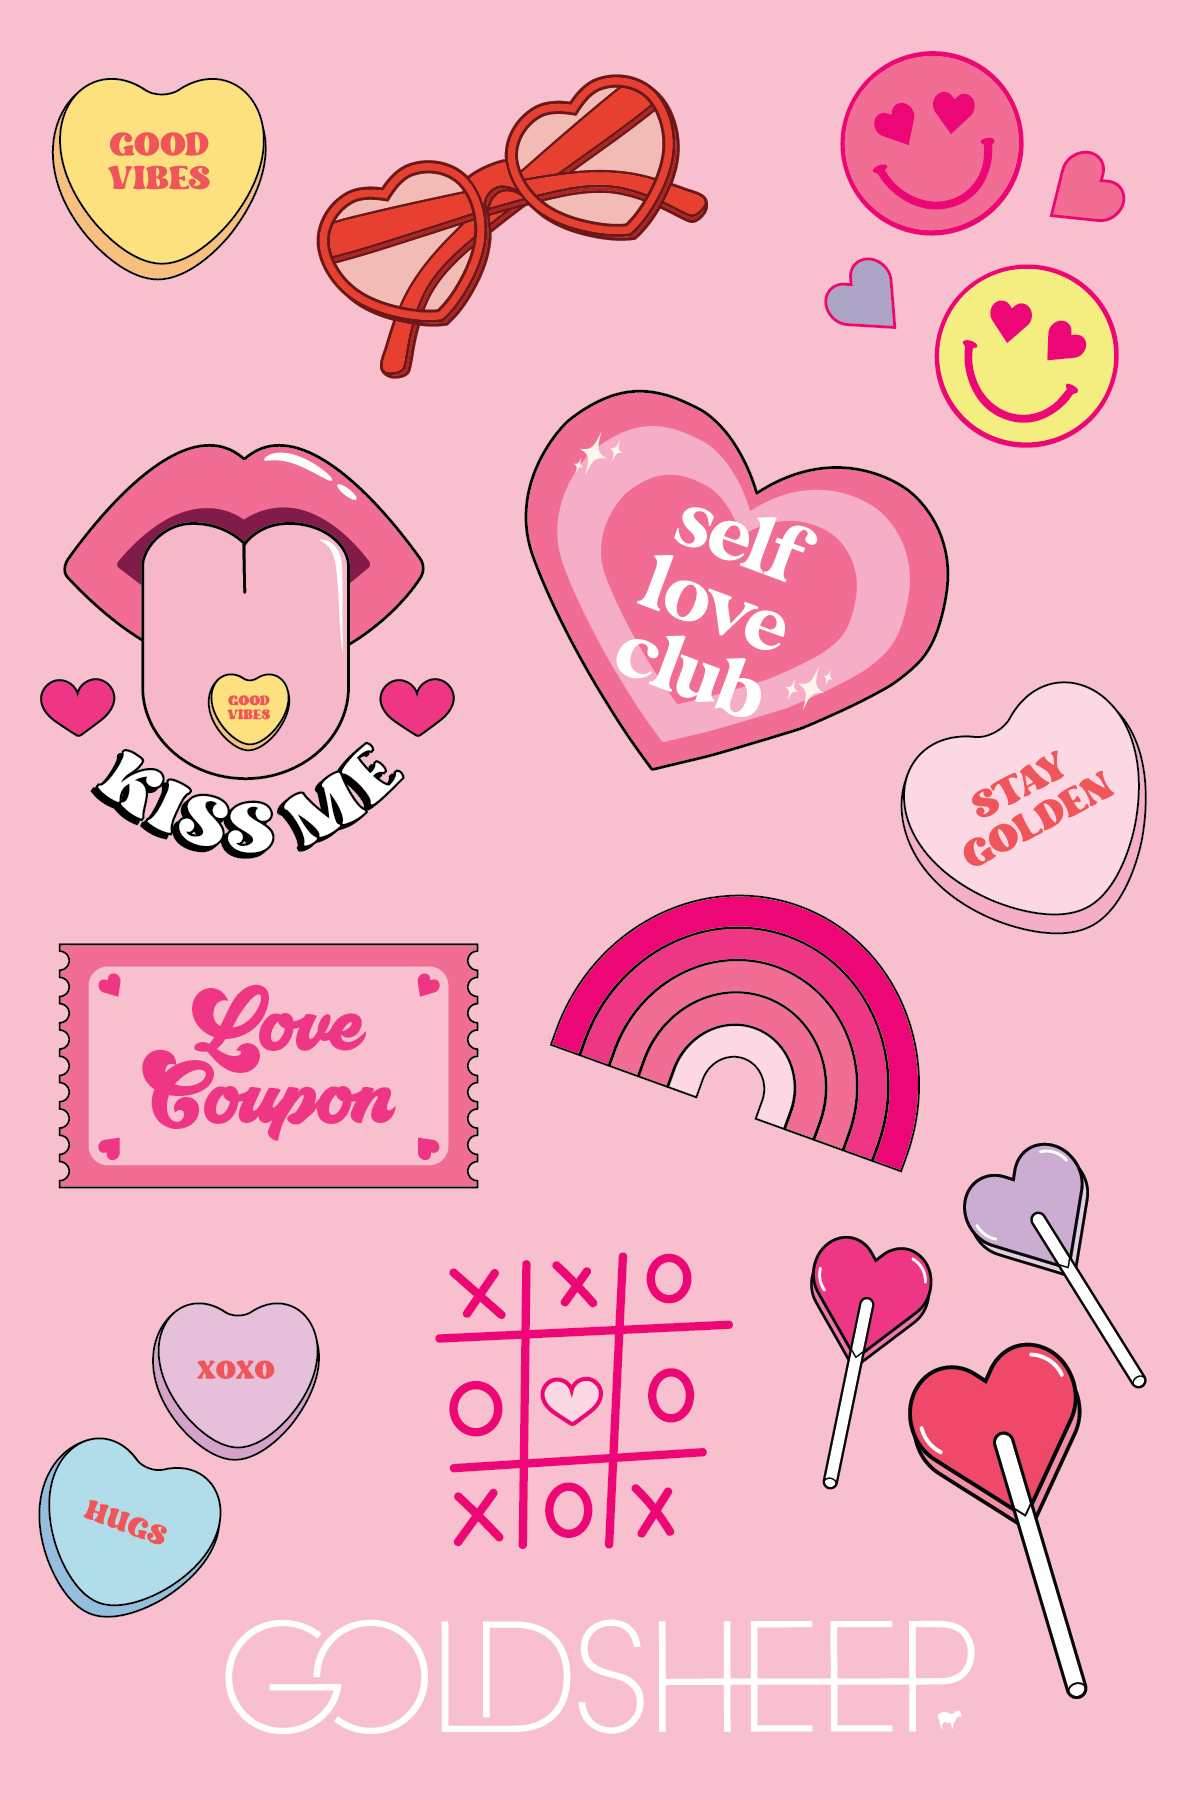 Goldsheep Valentine’s Day Sticker Sheet